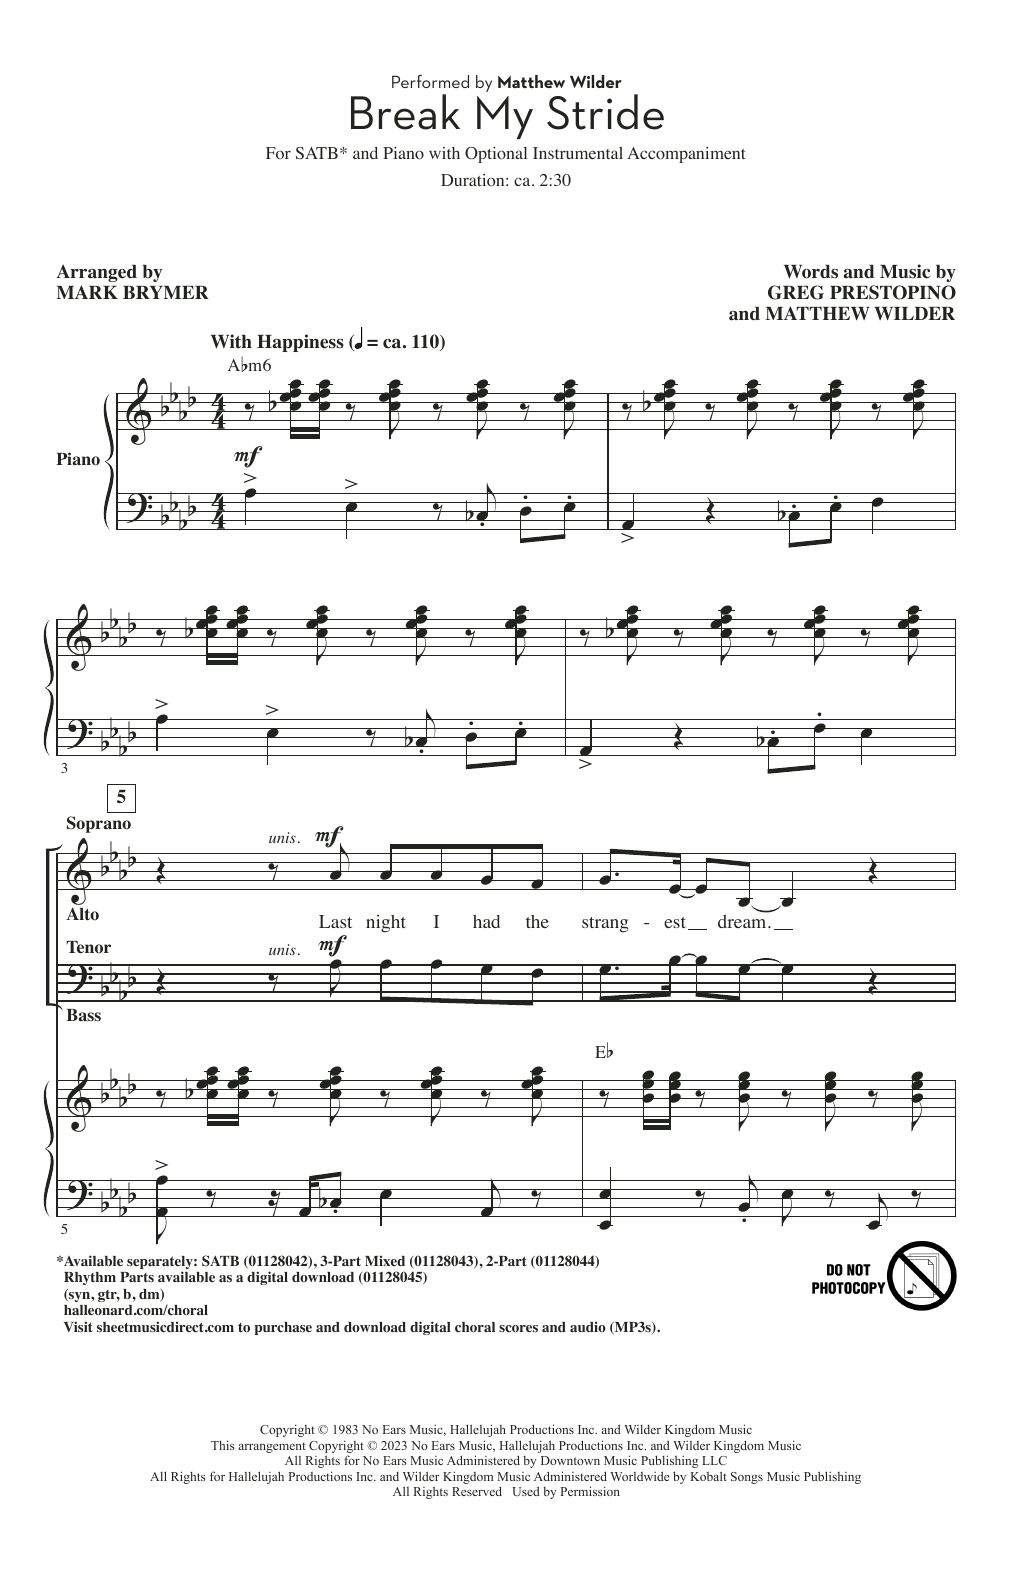 Matthew Wilder Break My Stride (arr. Mark Brymer) Sheet Music Notes & Chords for SATB Choir - Download or Print PDF